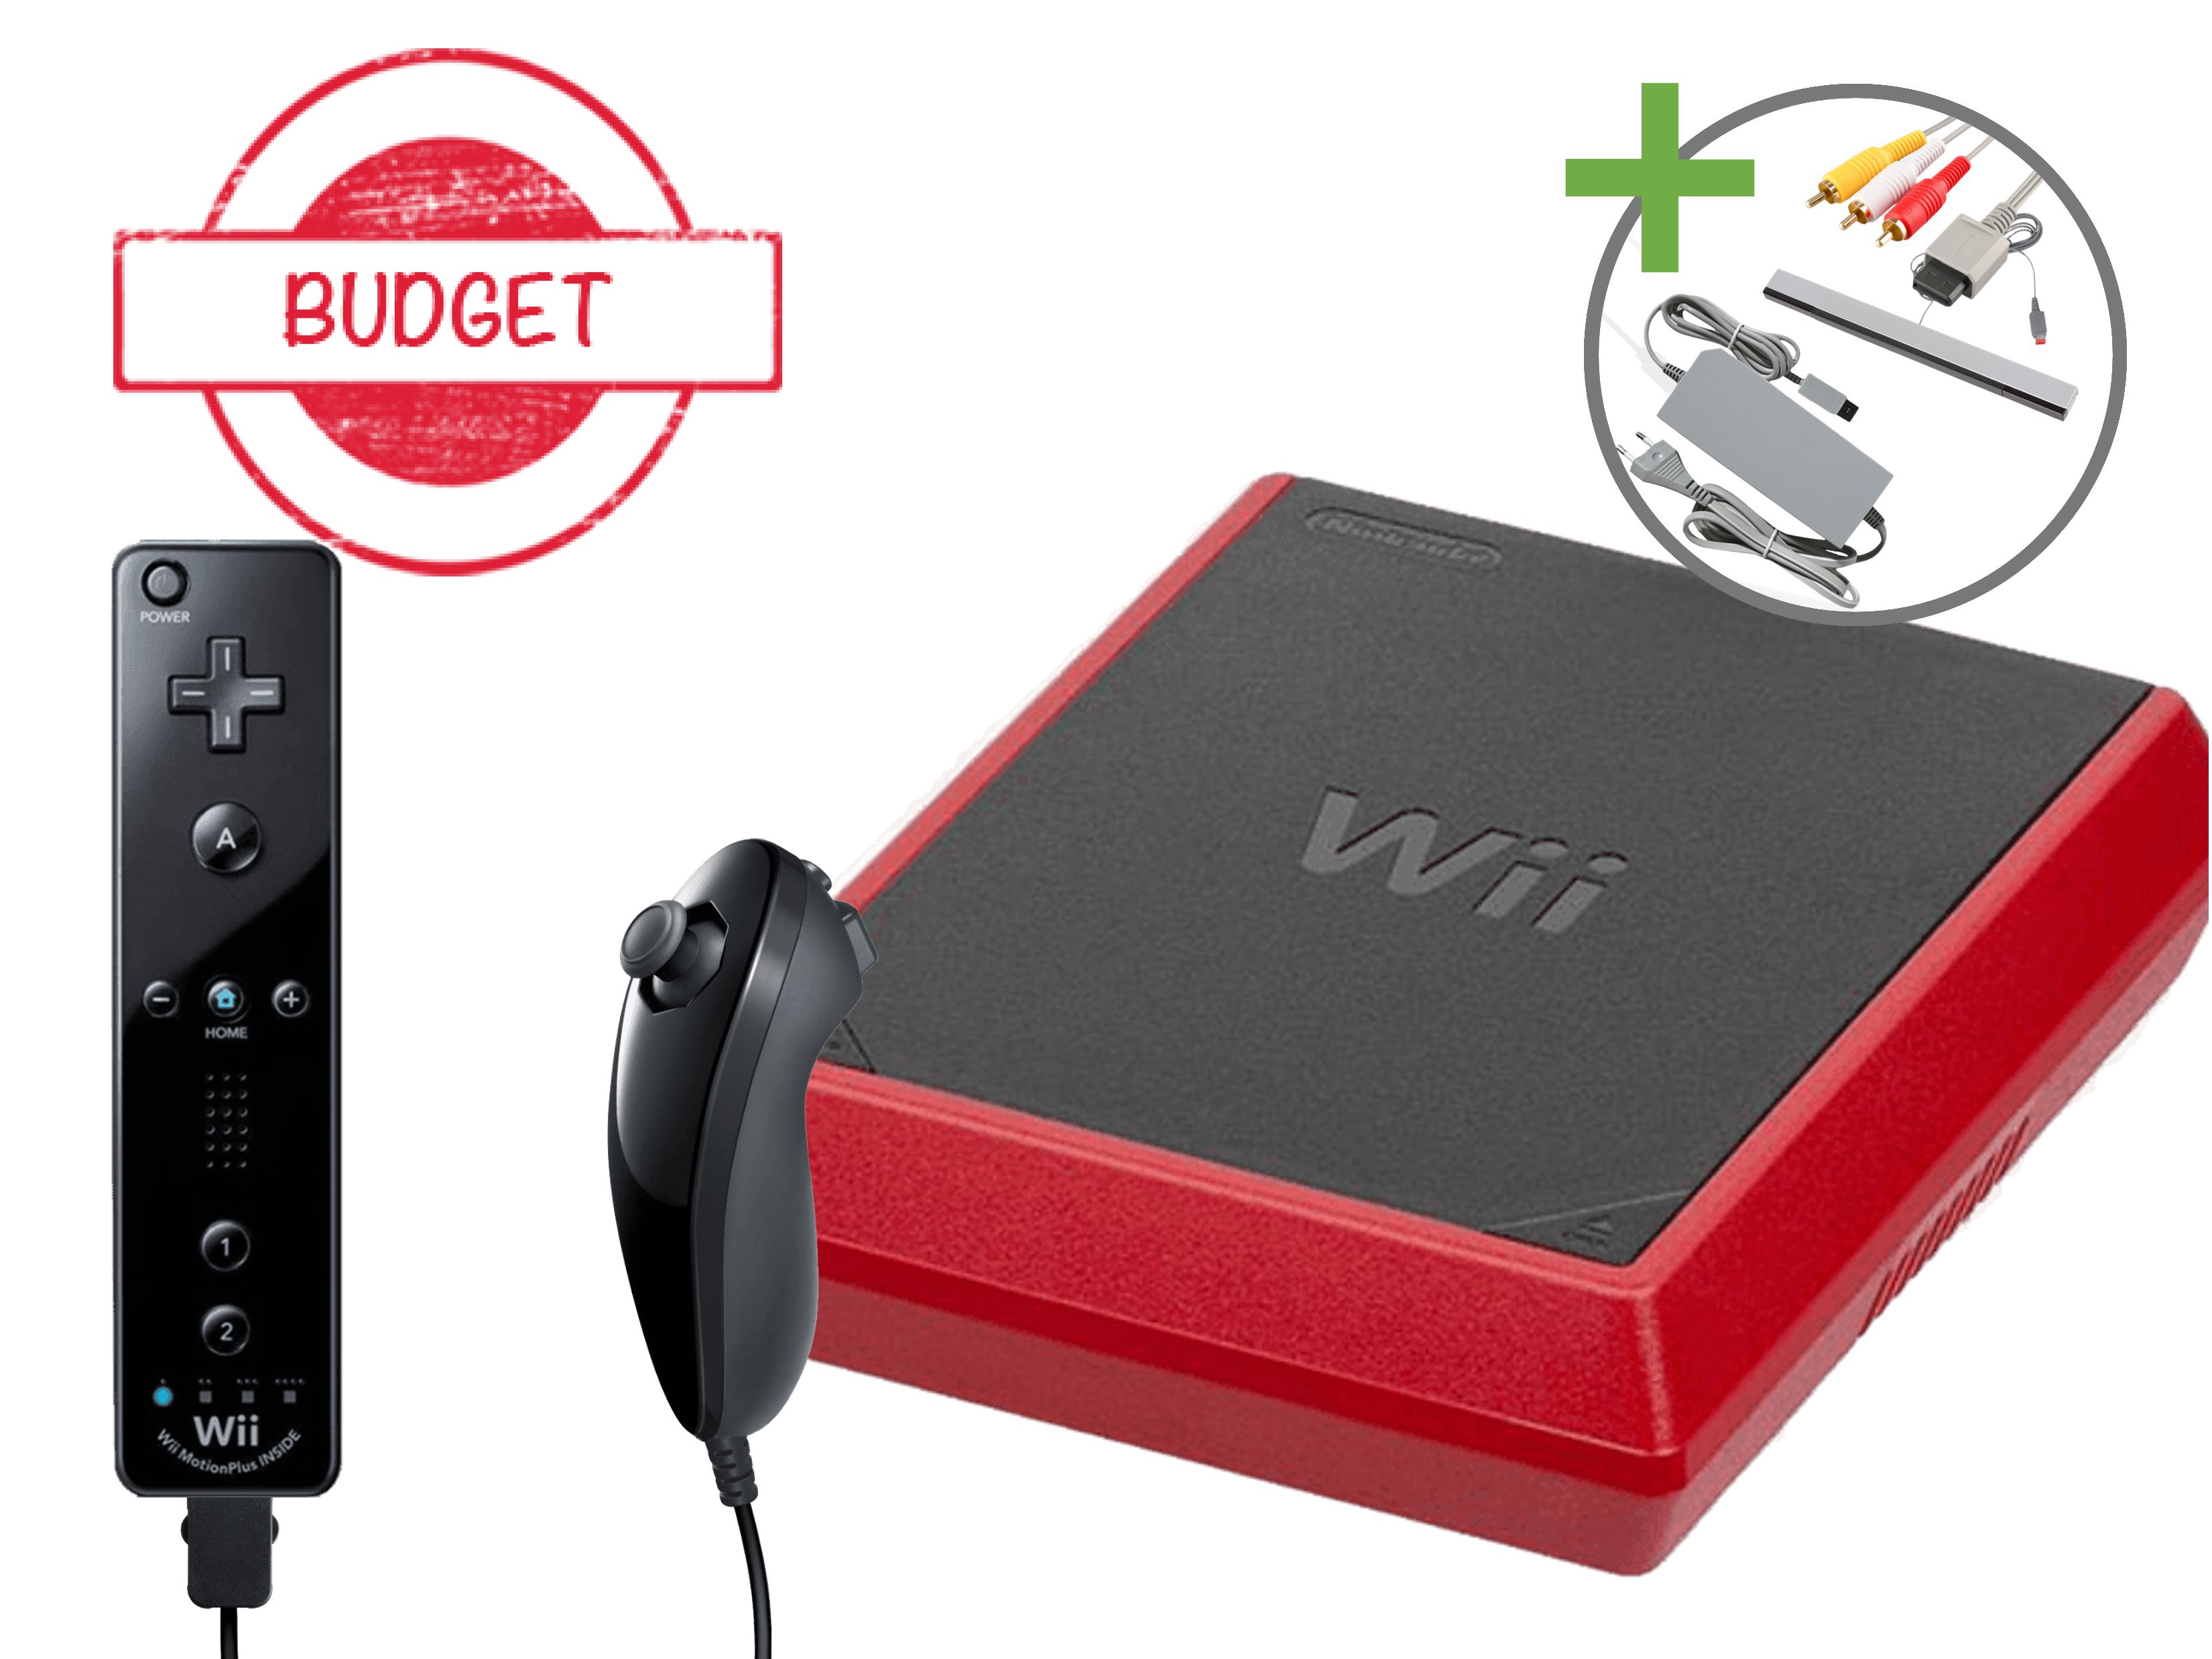 Nintendo Wii Mini Starter Pack - Motion Plus Black Edition - Budget - Wii Hardware